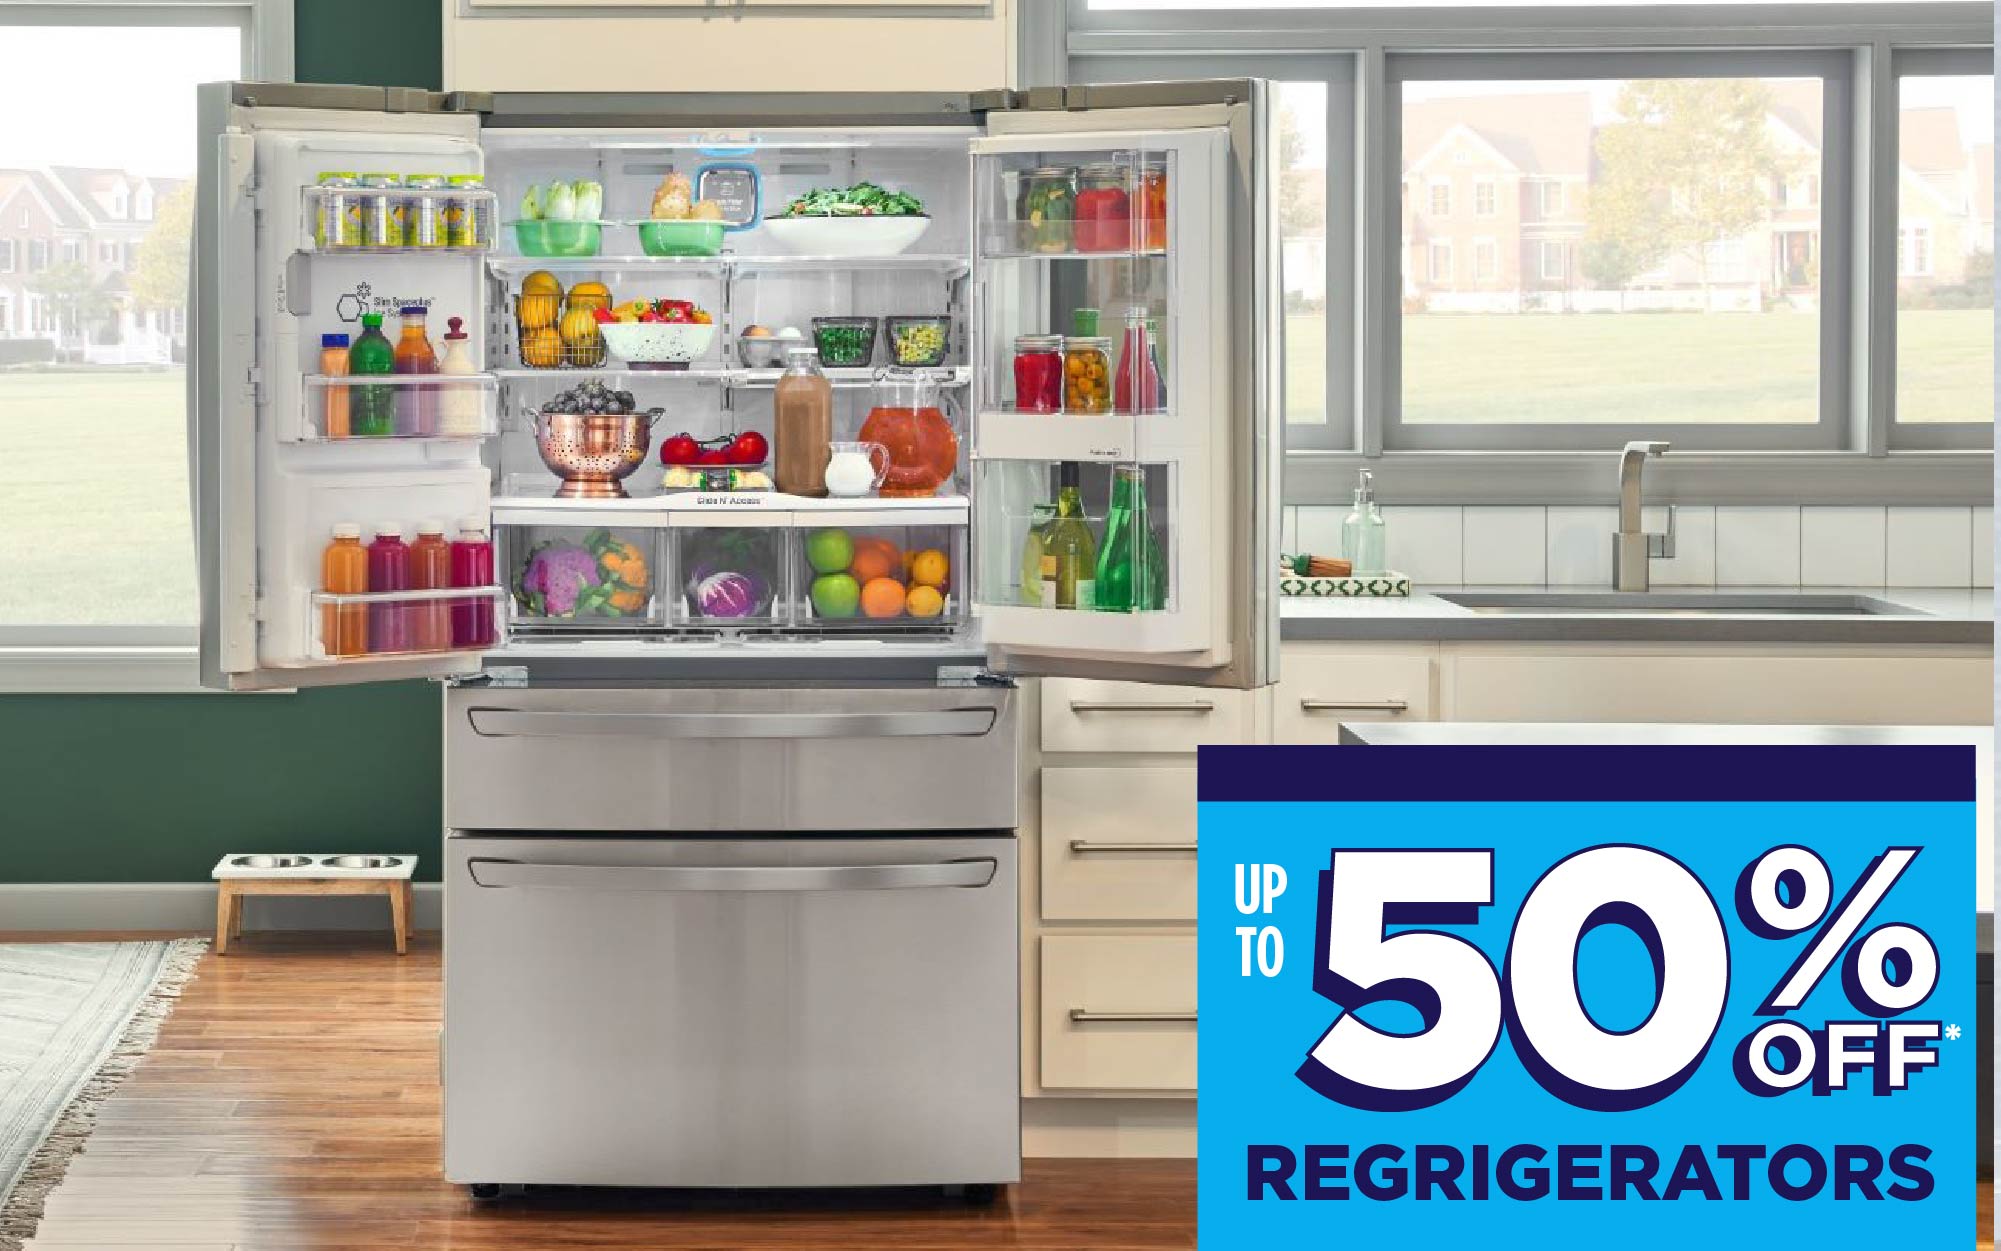 Cool Savings on Refrigerators!